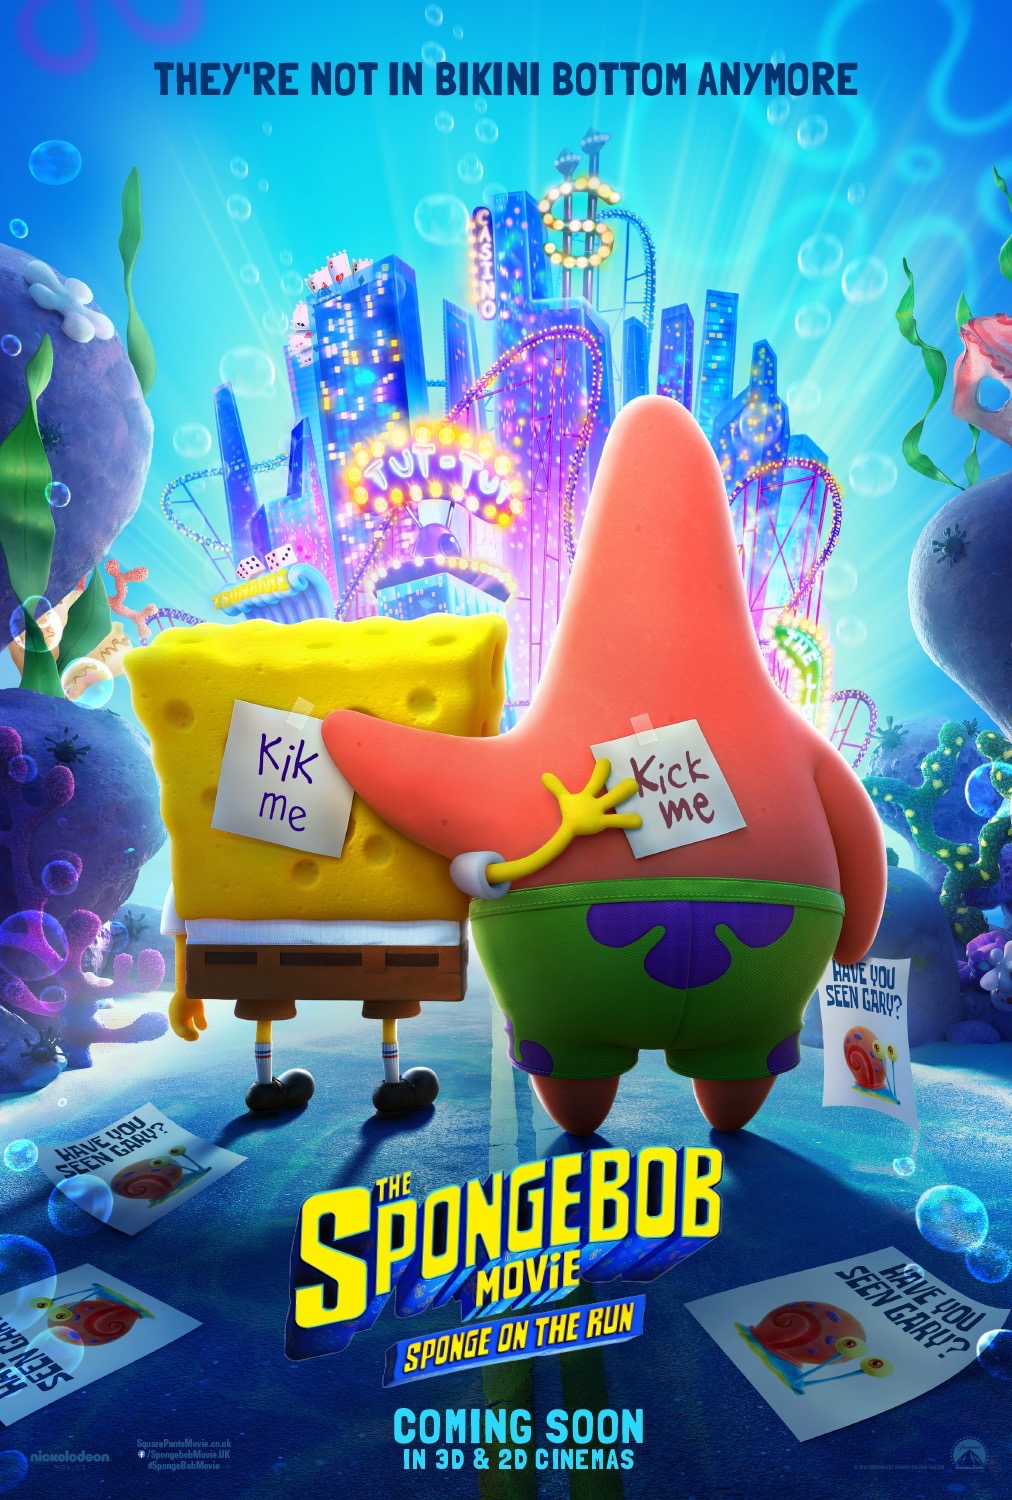 Banner Phim SpongeBob: Bọt Biển Đào Tẩu (The SpongeBob Movie: Sponge on the Run)